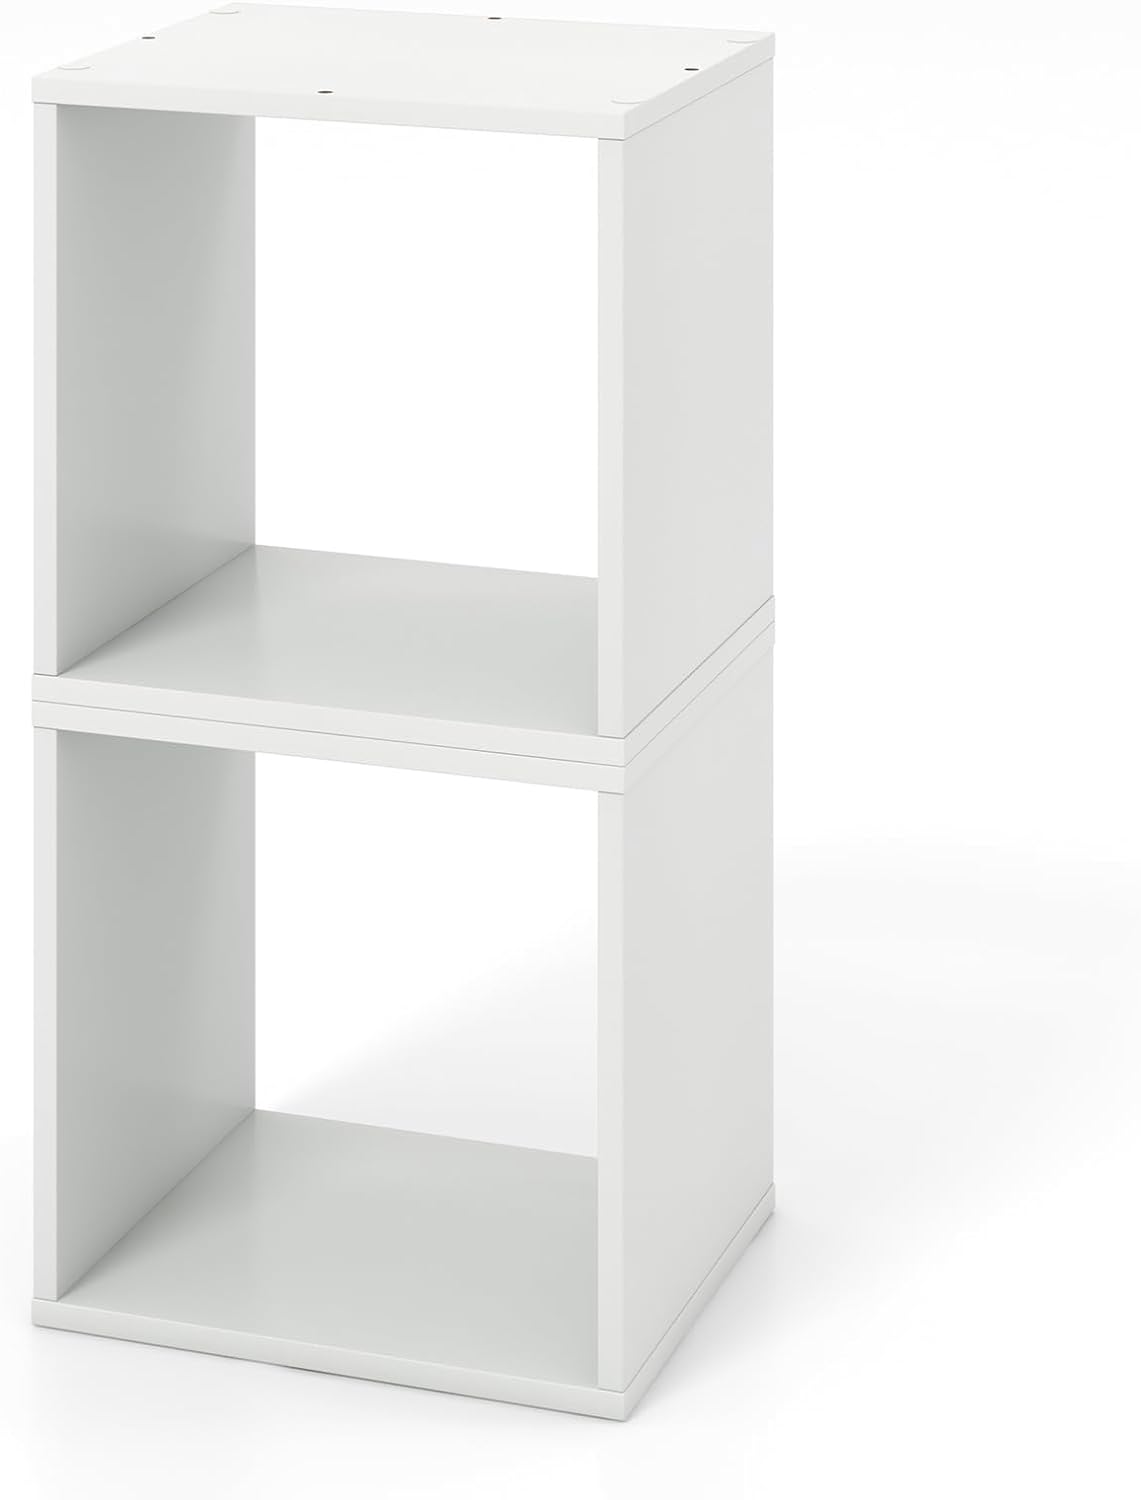 Giantex 2 Cube Bookshelf Organizer, 2-Tier Stackable Cube Storage Organizer